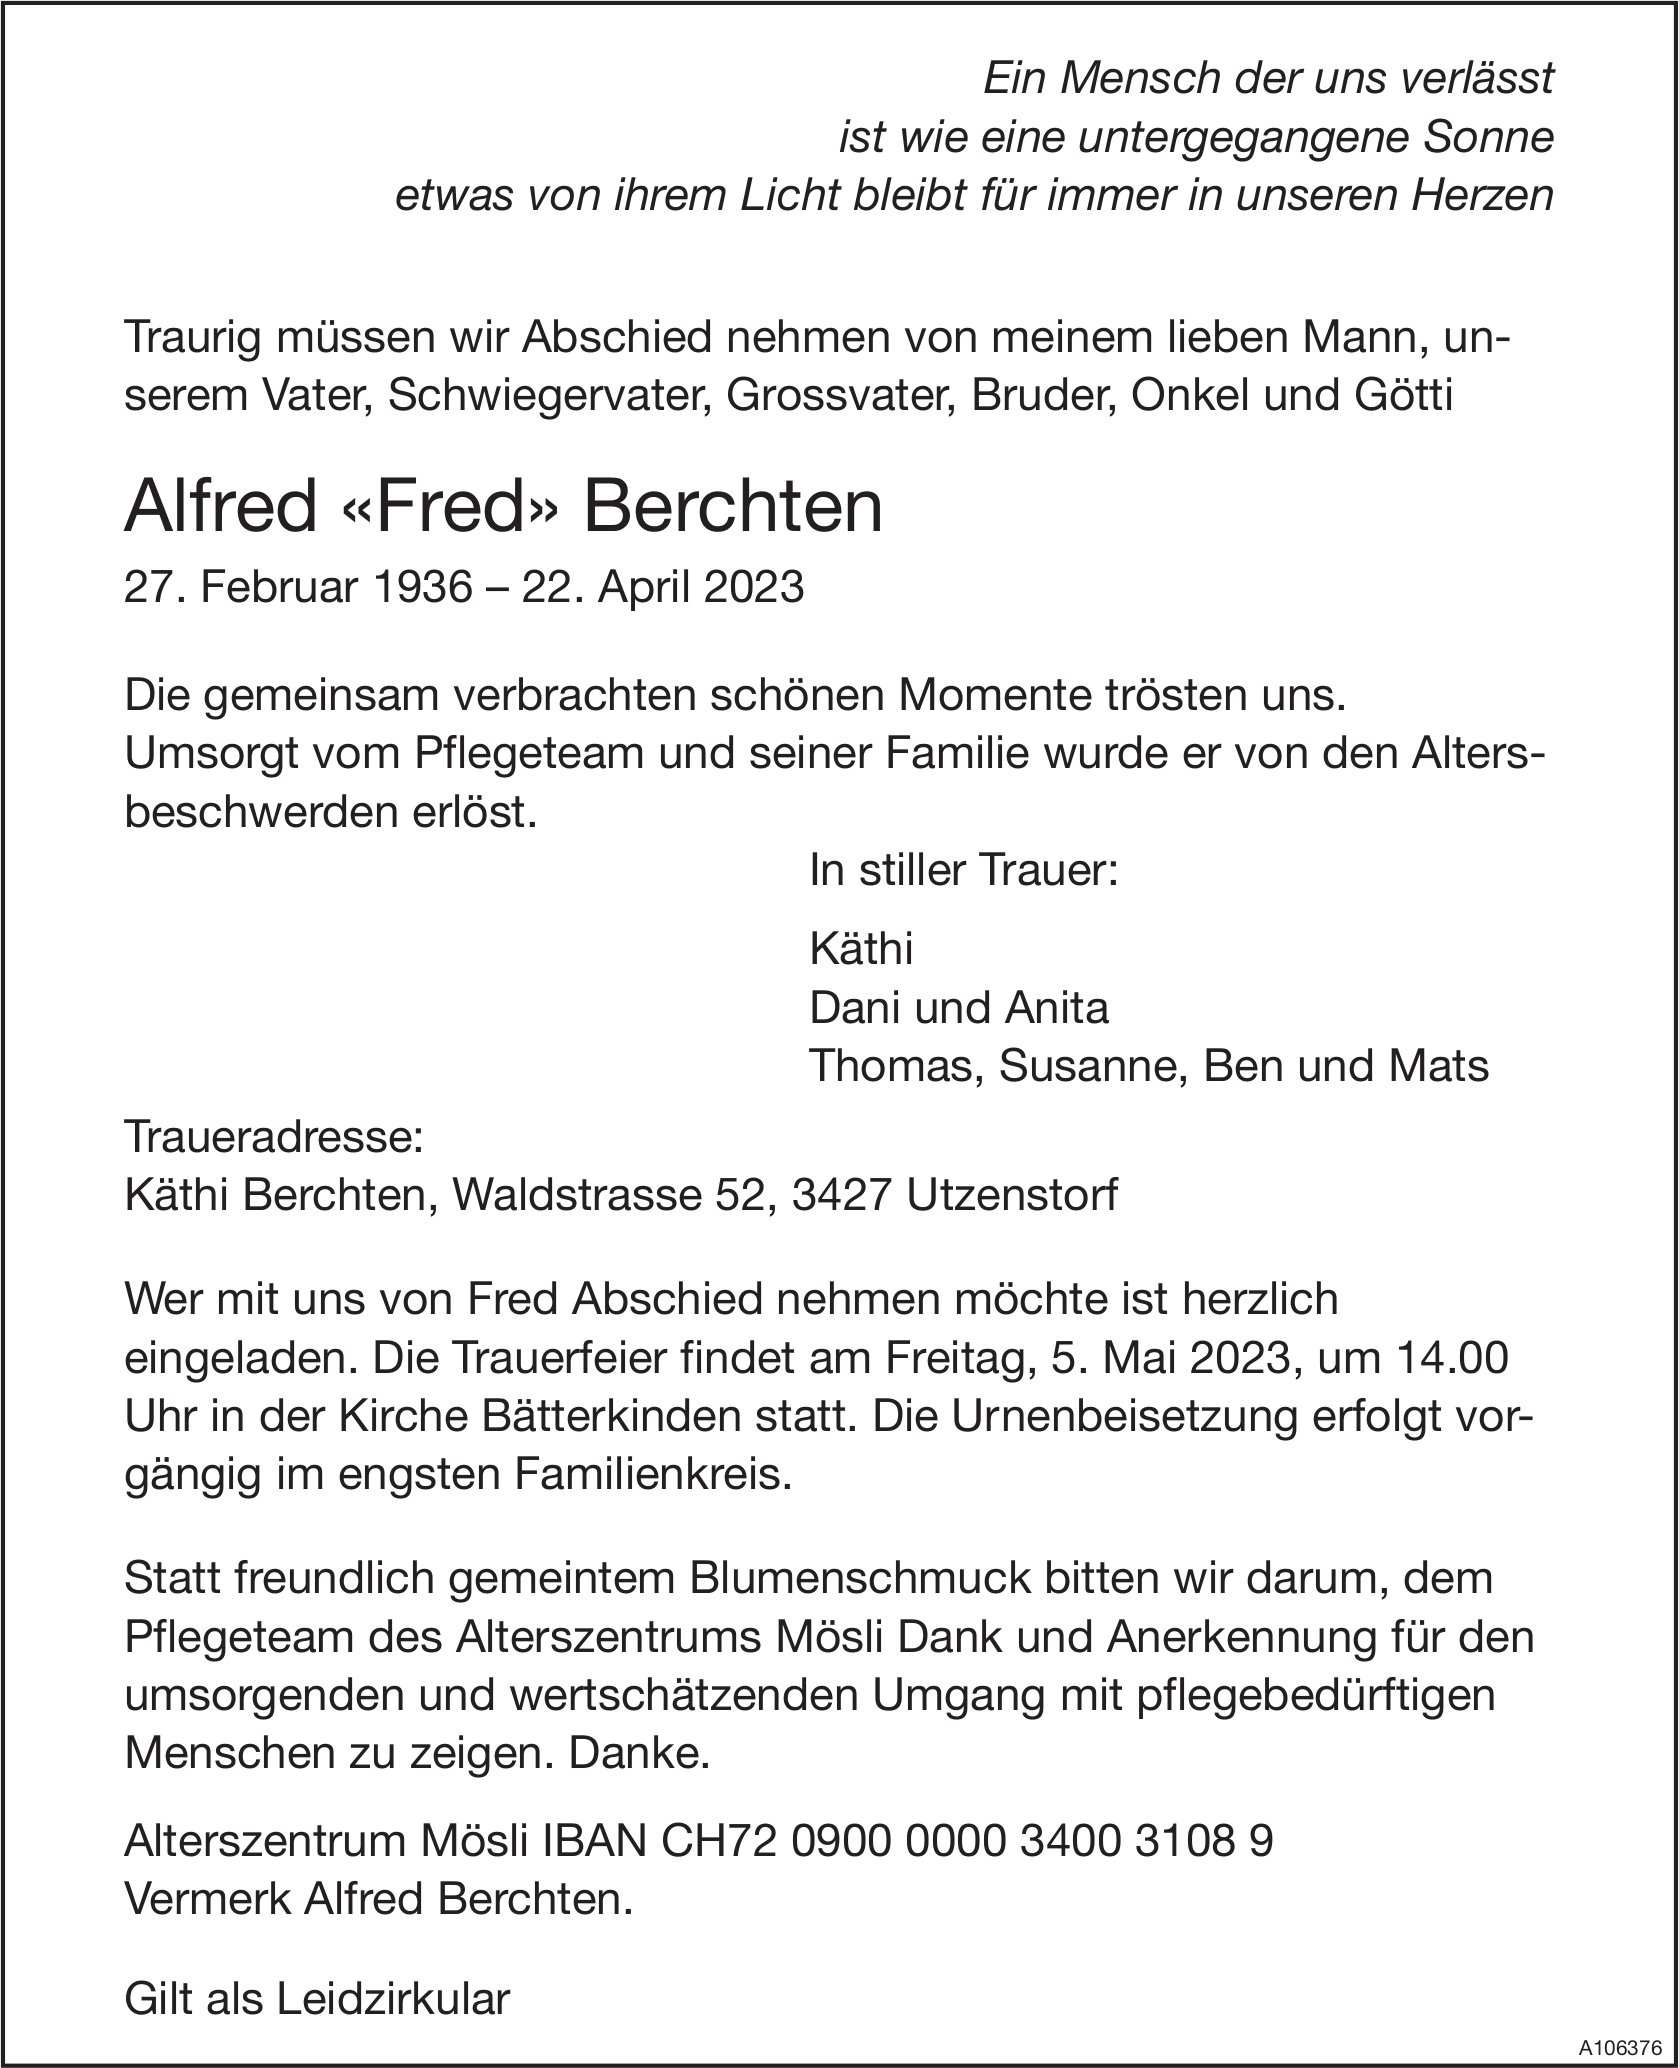 Alfred «Fred» Berchten, April 2023 / TA